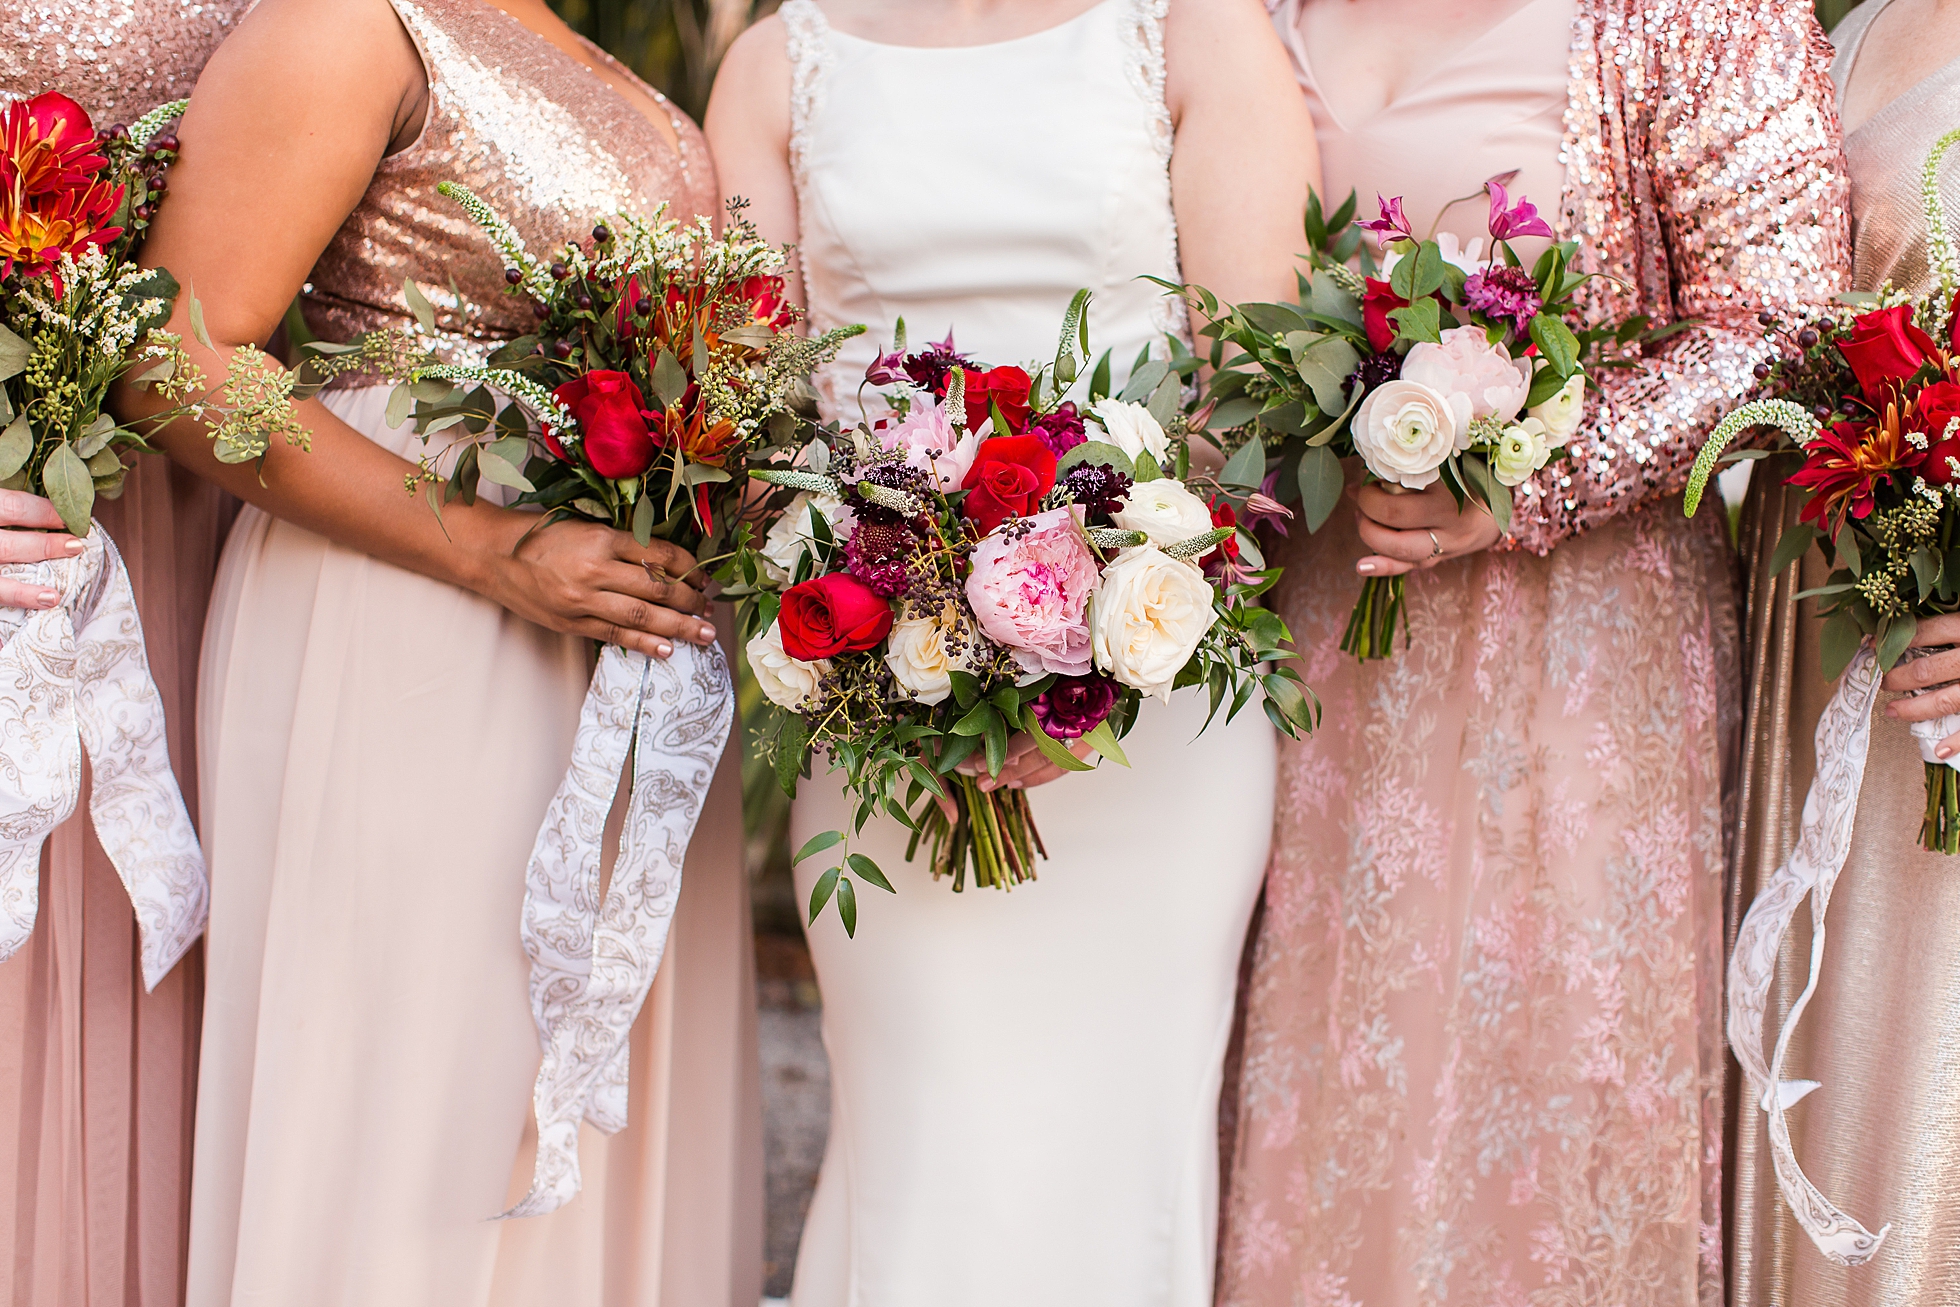 metallic sparkly bridesmaids dresses